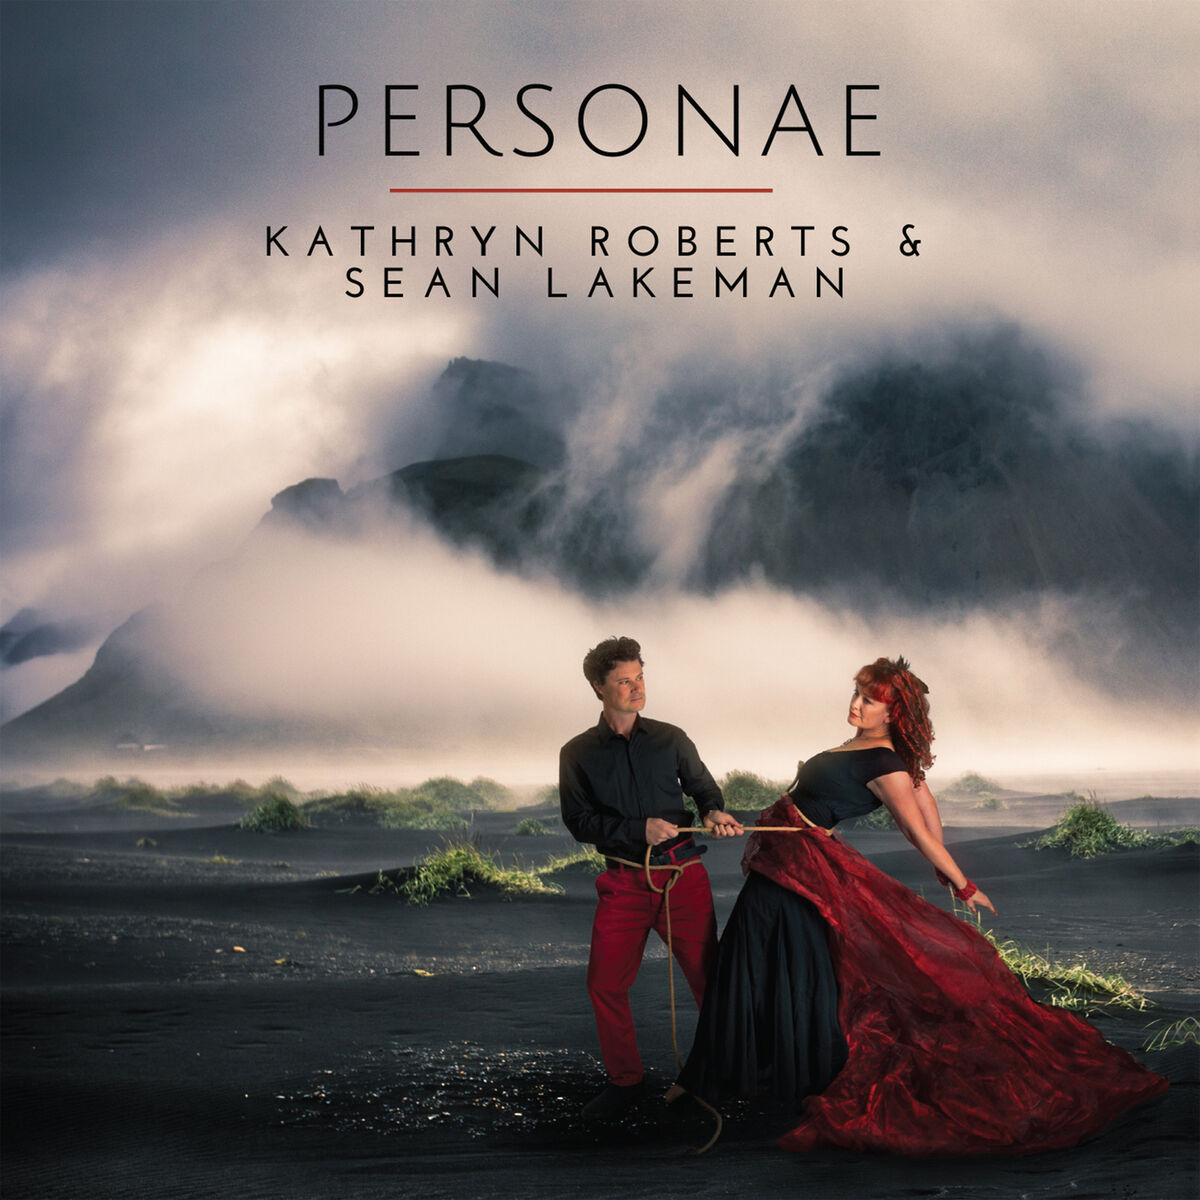 Kathryn Roberts & Sean Lakeman - 2018 - Personae